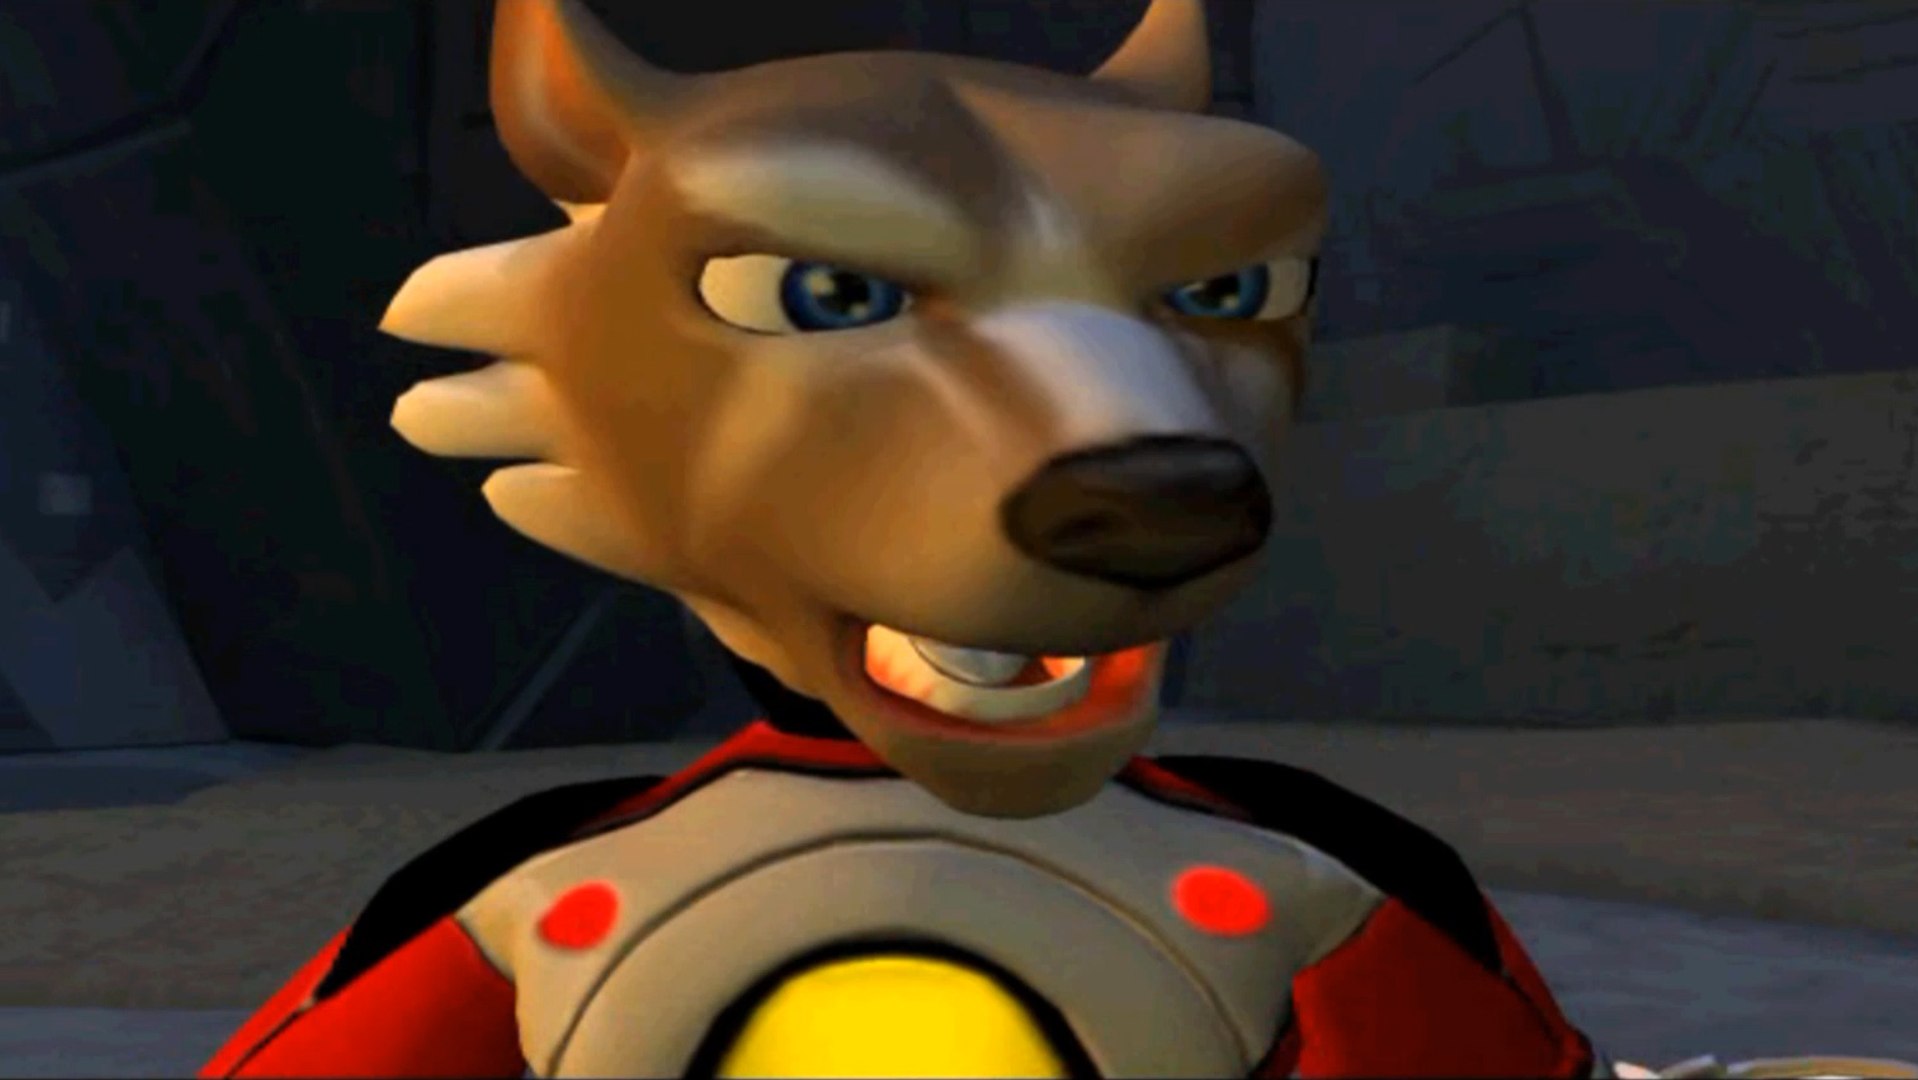 Star Fox Adventures Game Movie (All Cutscenes) 